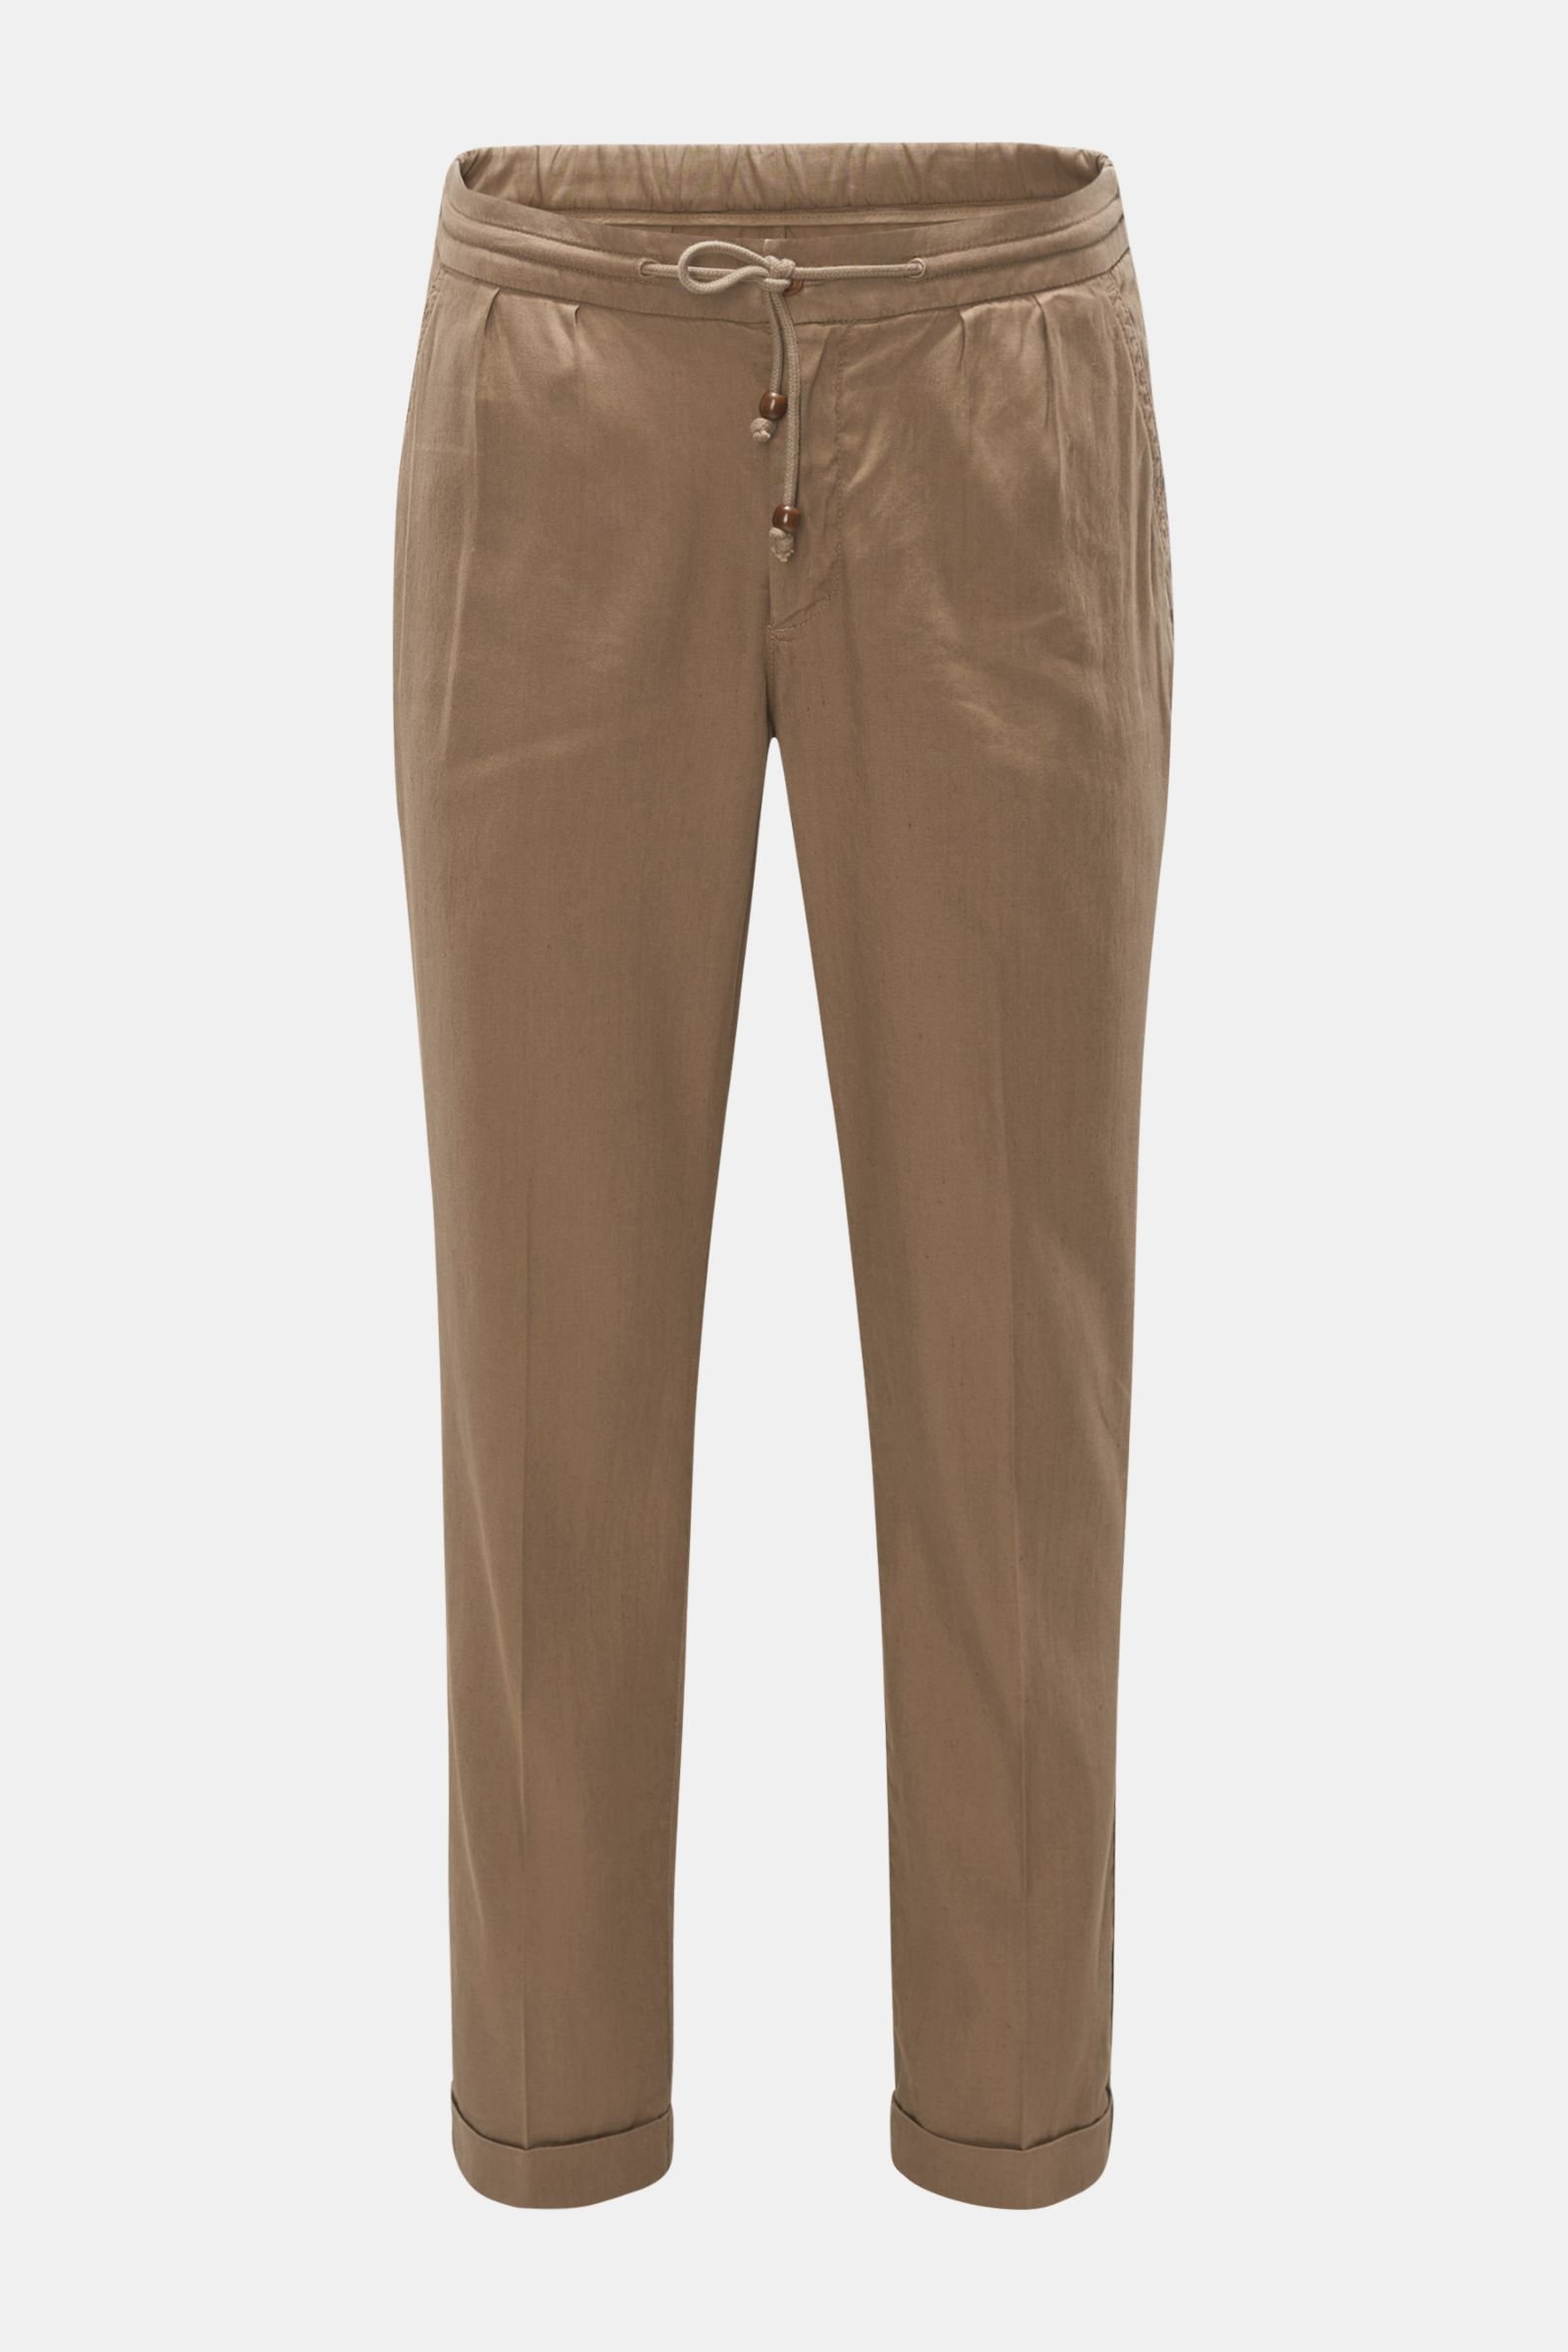 Jogger pants light brown